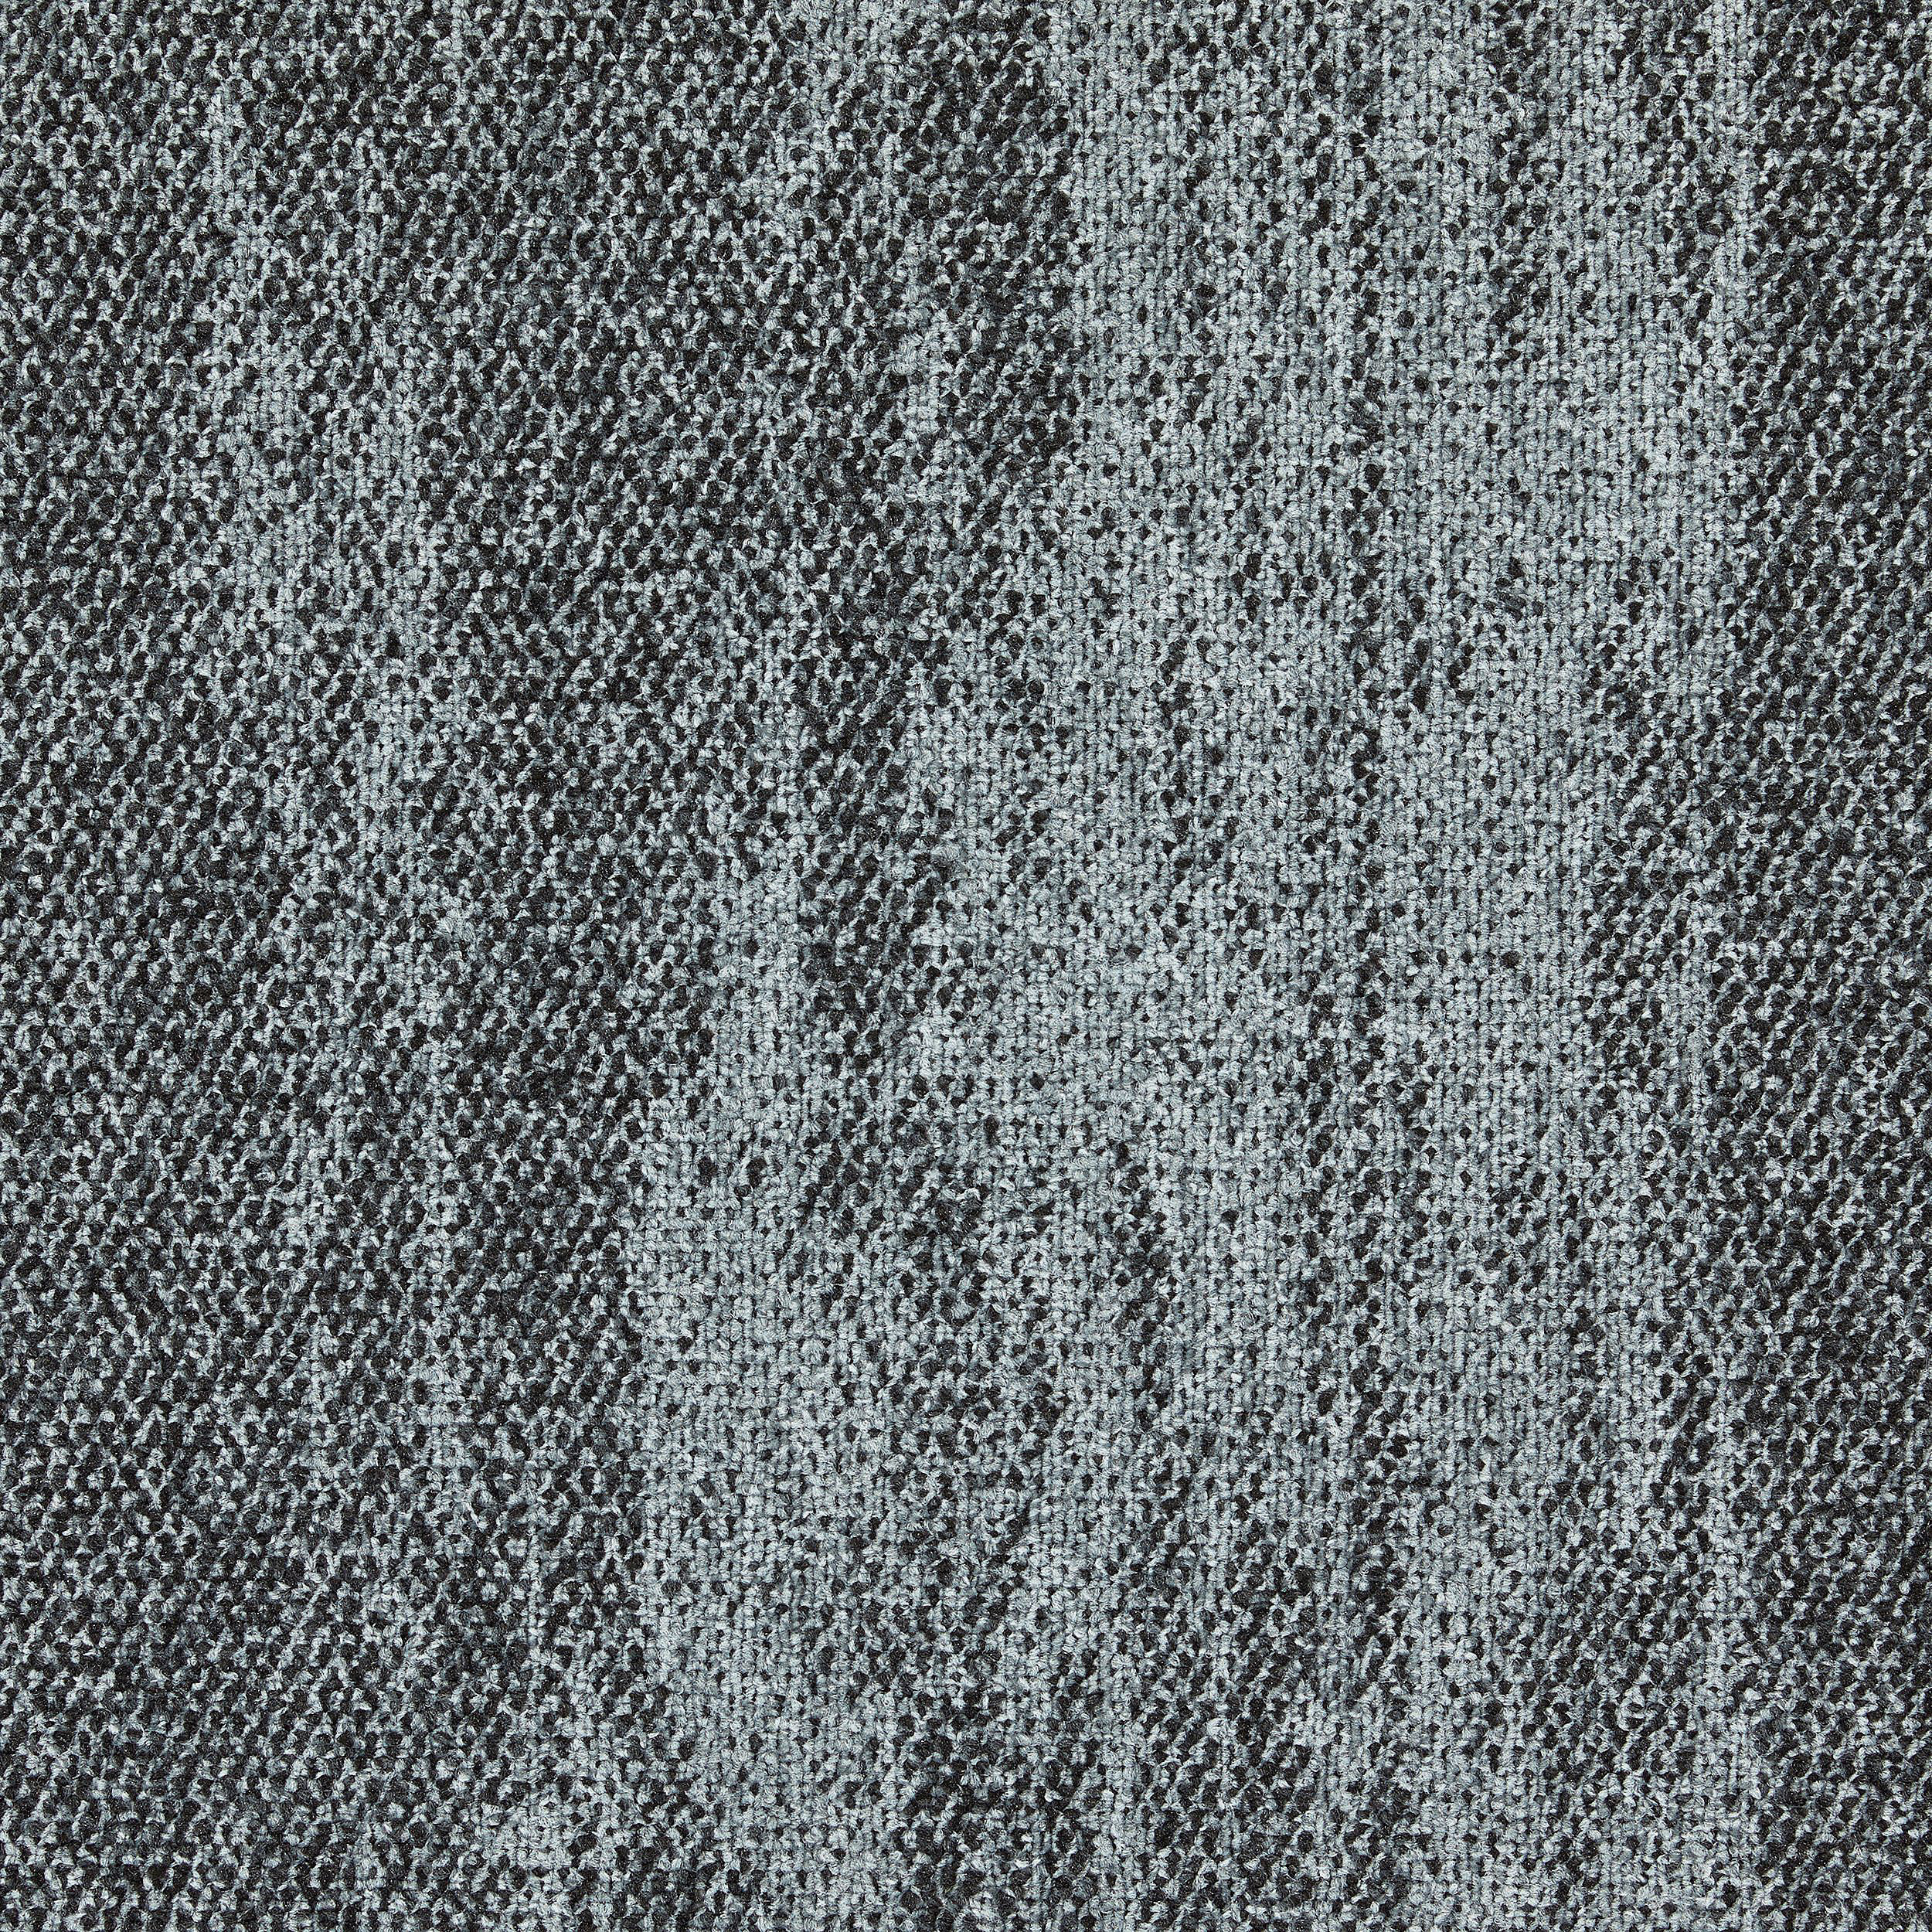 Works Flow Carpet Tile In Pebble afbeeldingnummer 8